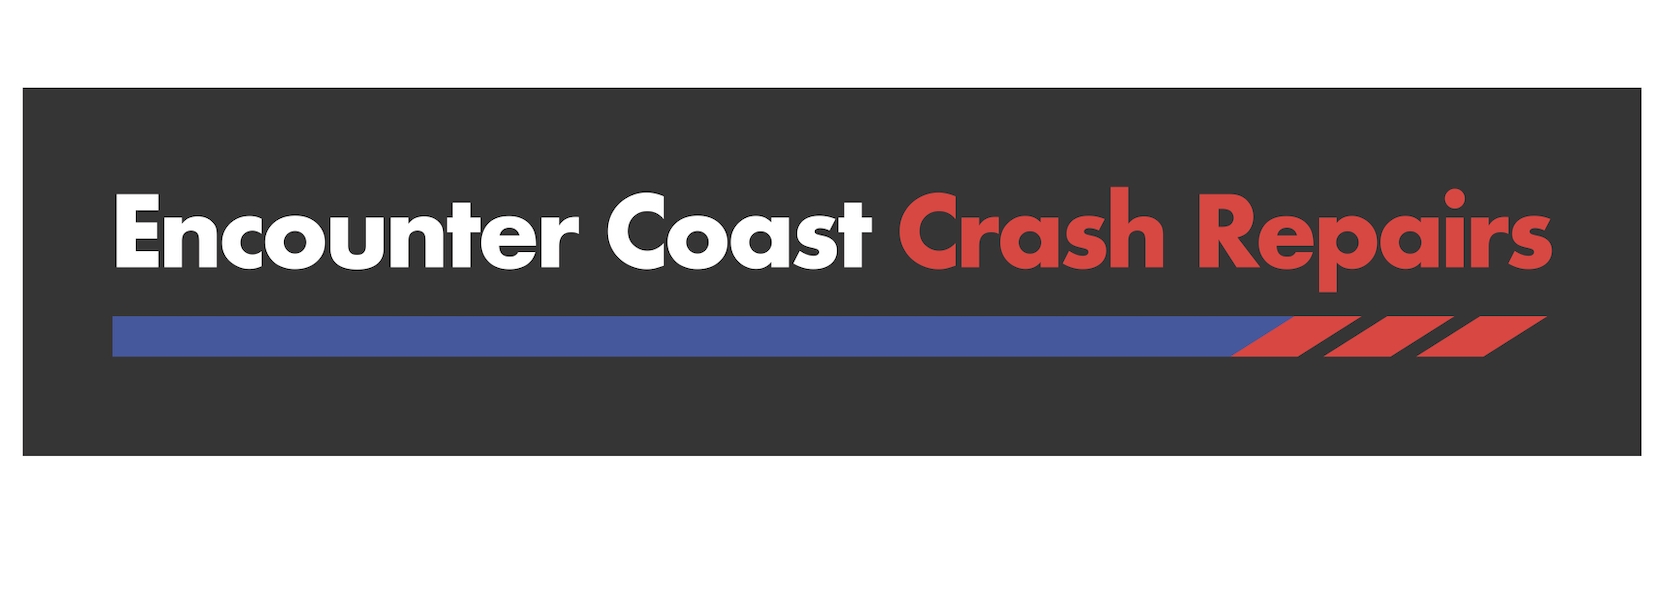 Encounter Coast Crash Repairs Logo